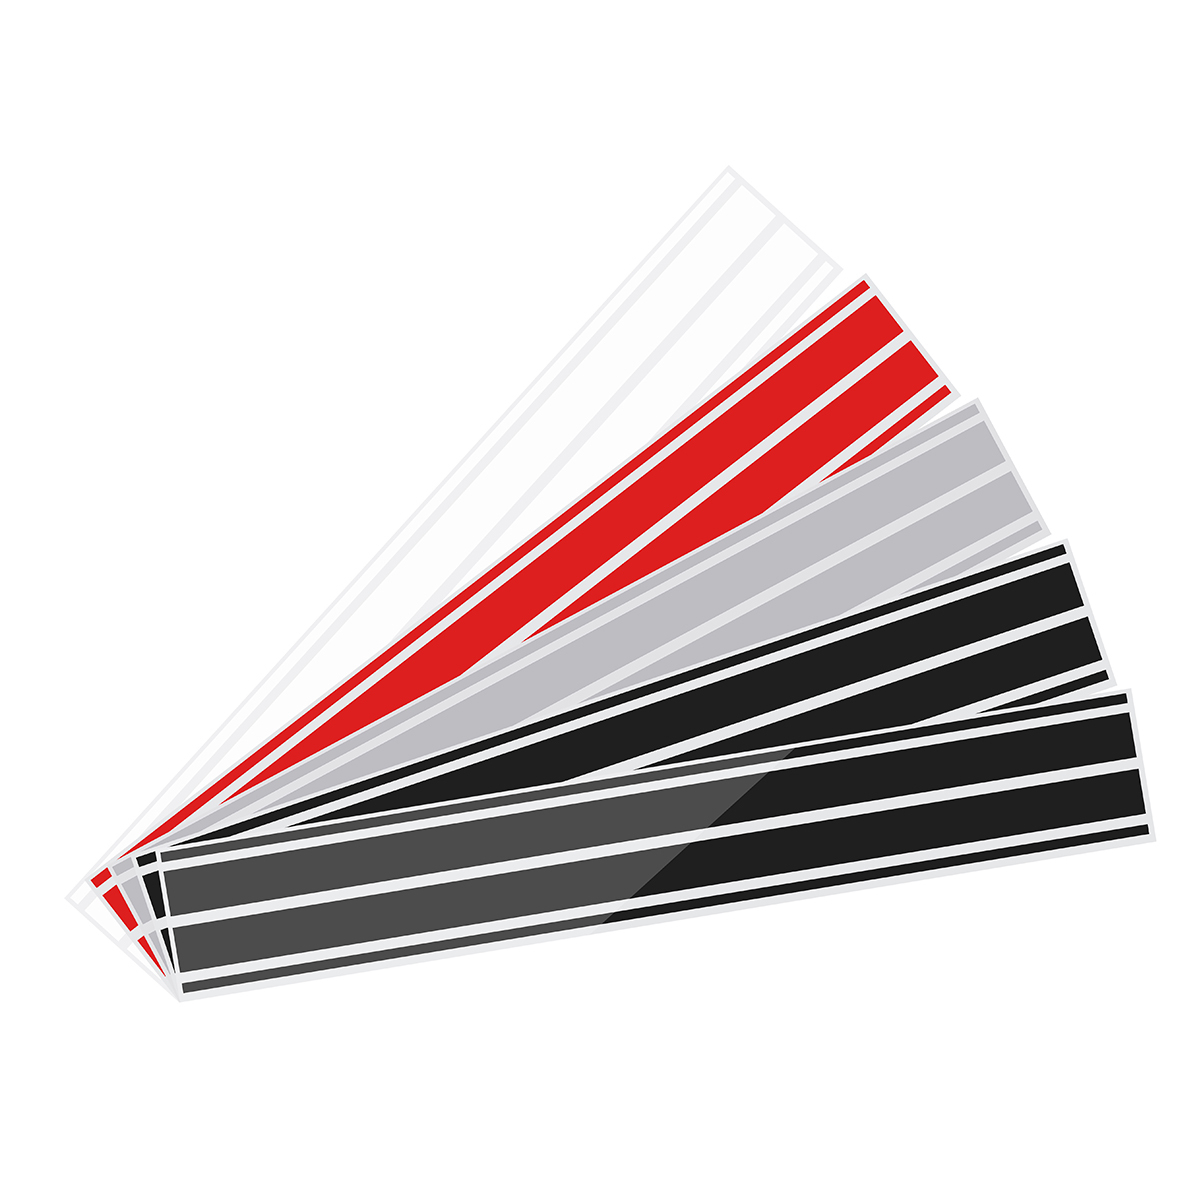 4Pcs Bonnet Hood Stripes Car Decal Stickers for Benz A C GLA GLC CLA W176 C117 W204 W205 2